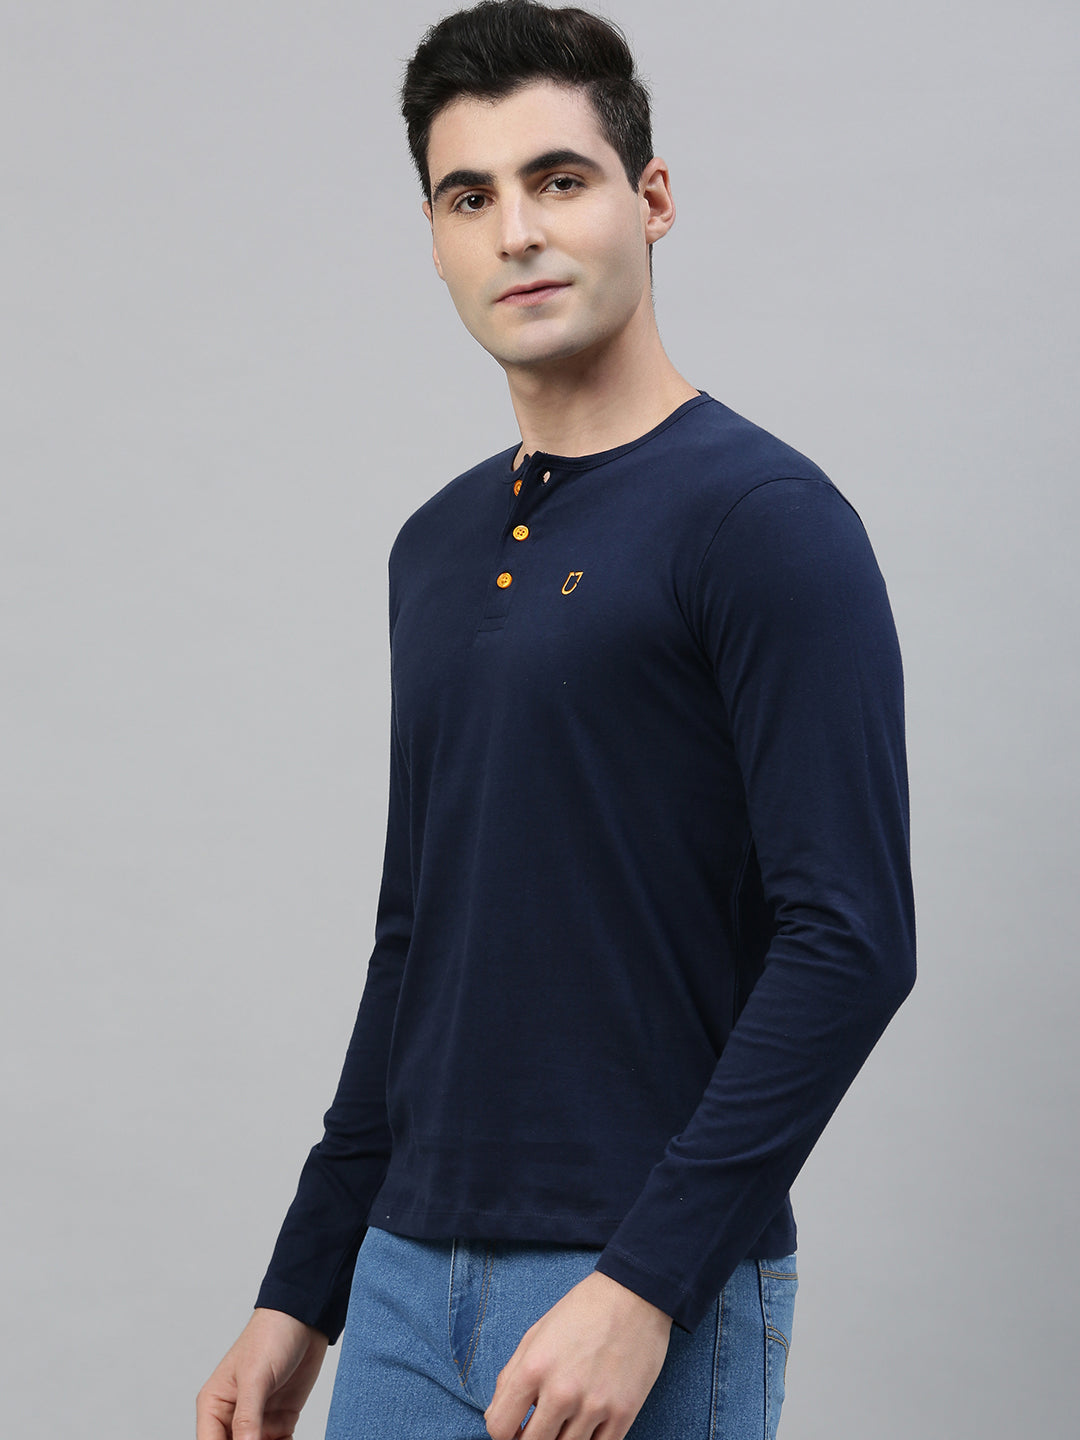 Urbano Fashion Men's Navy Blue Solid Henley Neck Slim Fit Cotton T-Shirt